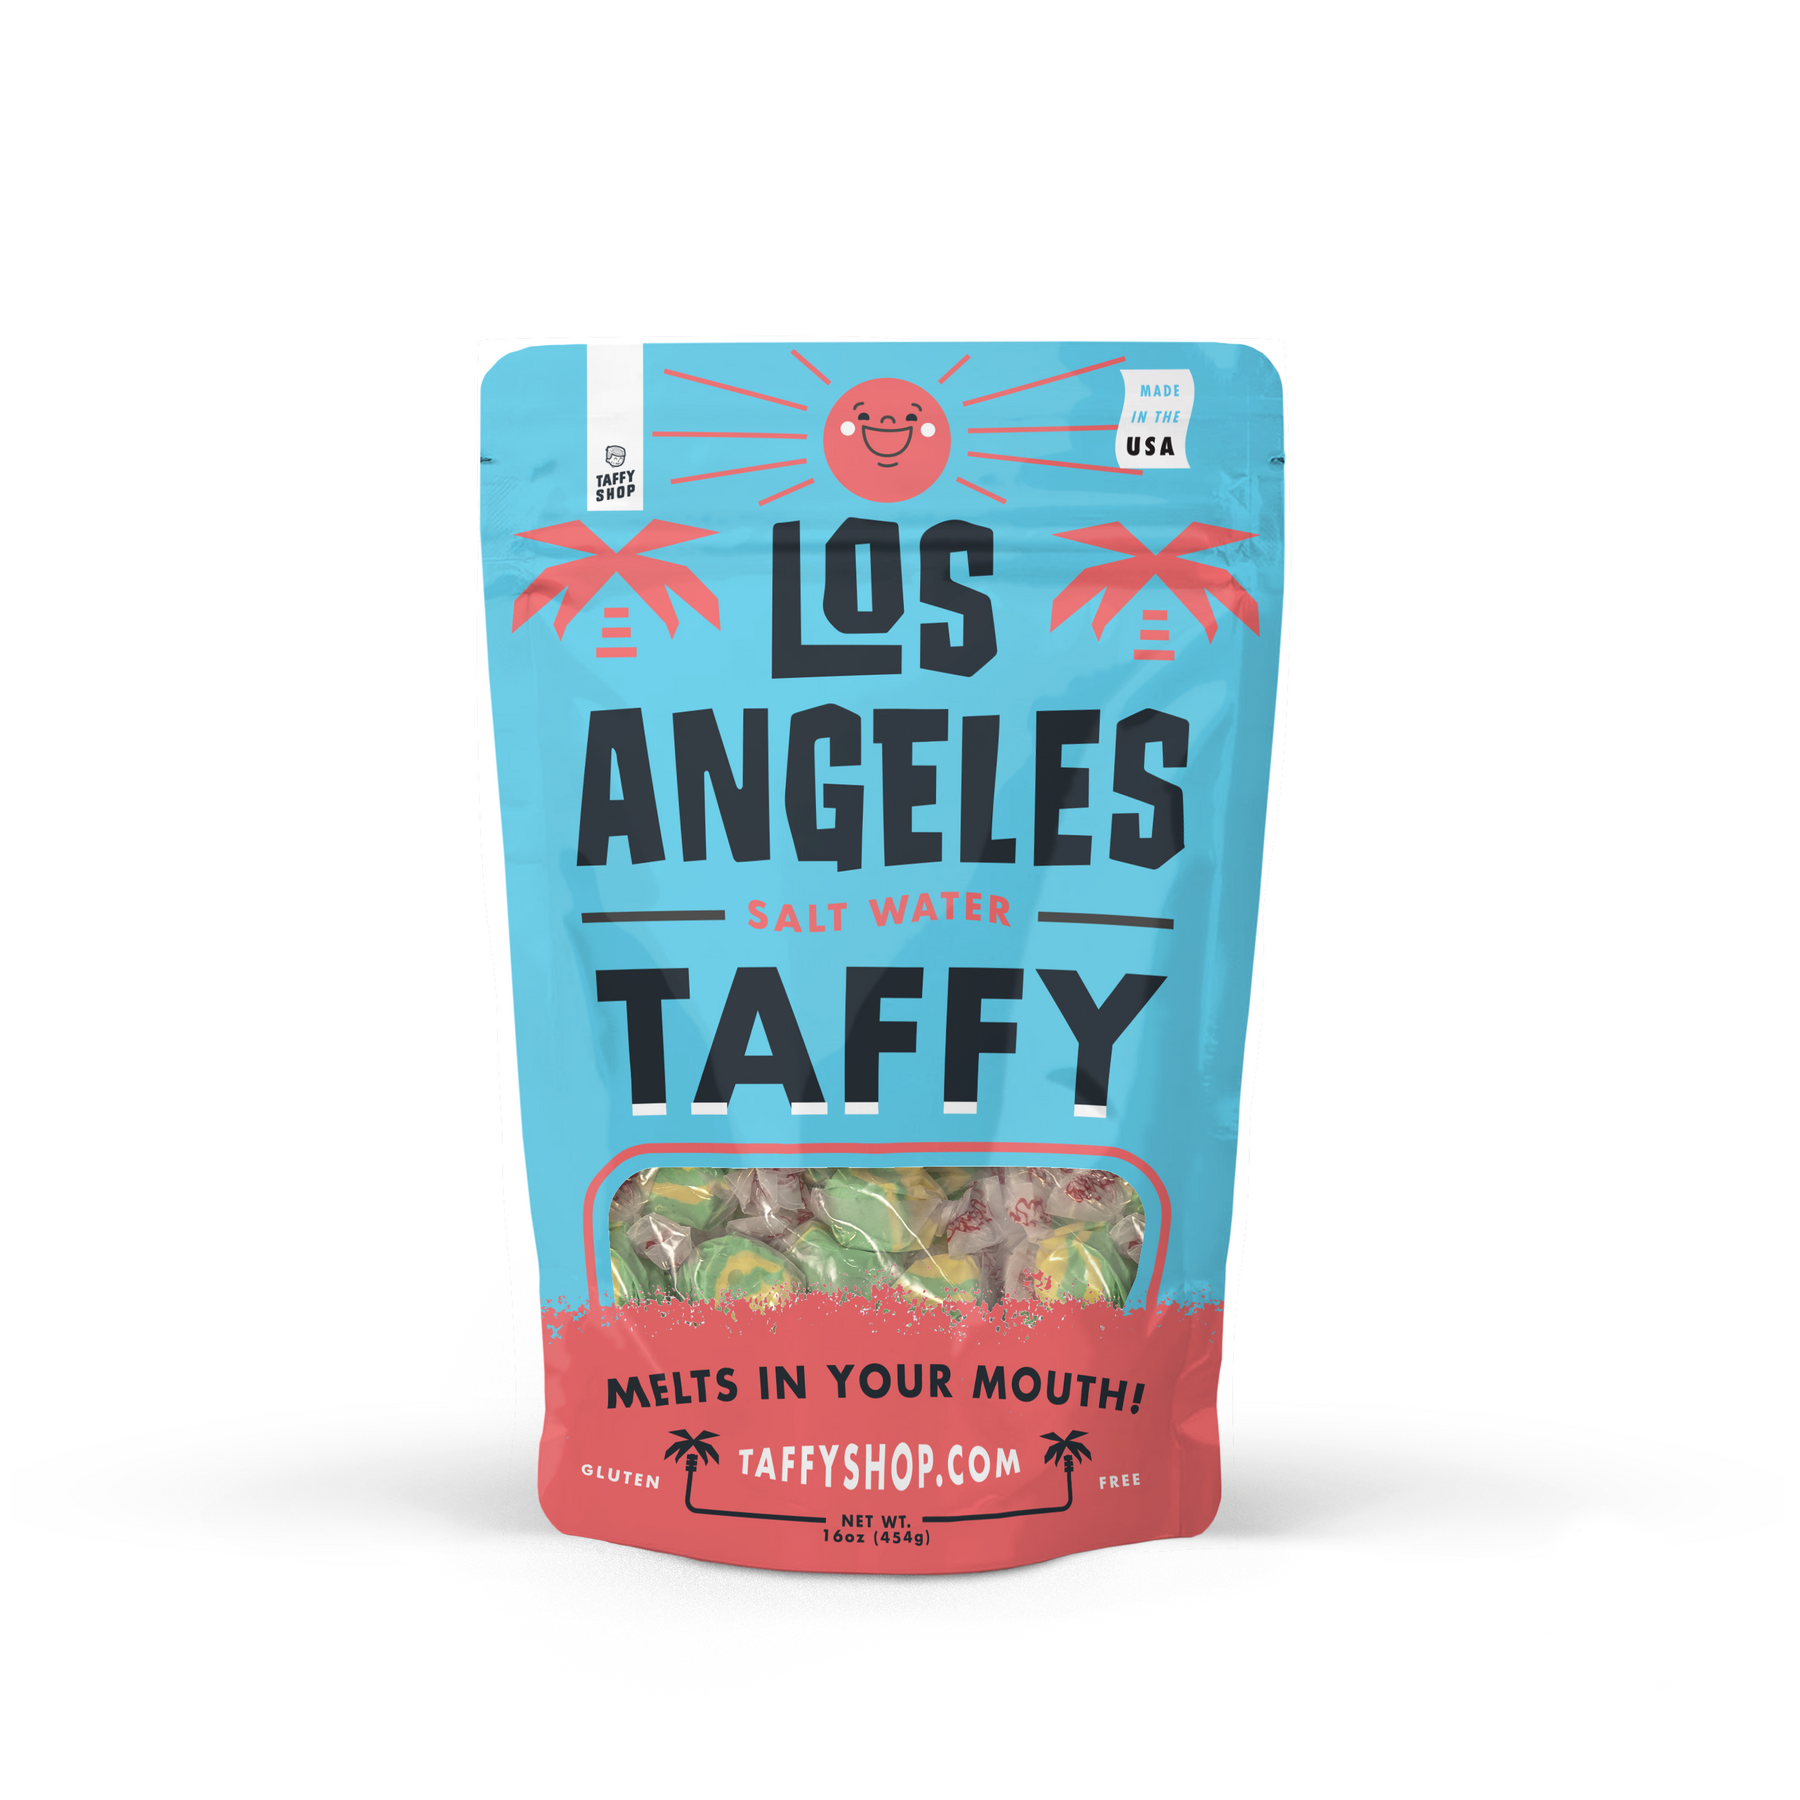 Los Angeles Salt Water Taffy, Best flavors around the beach.